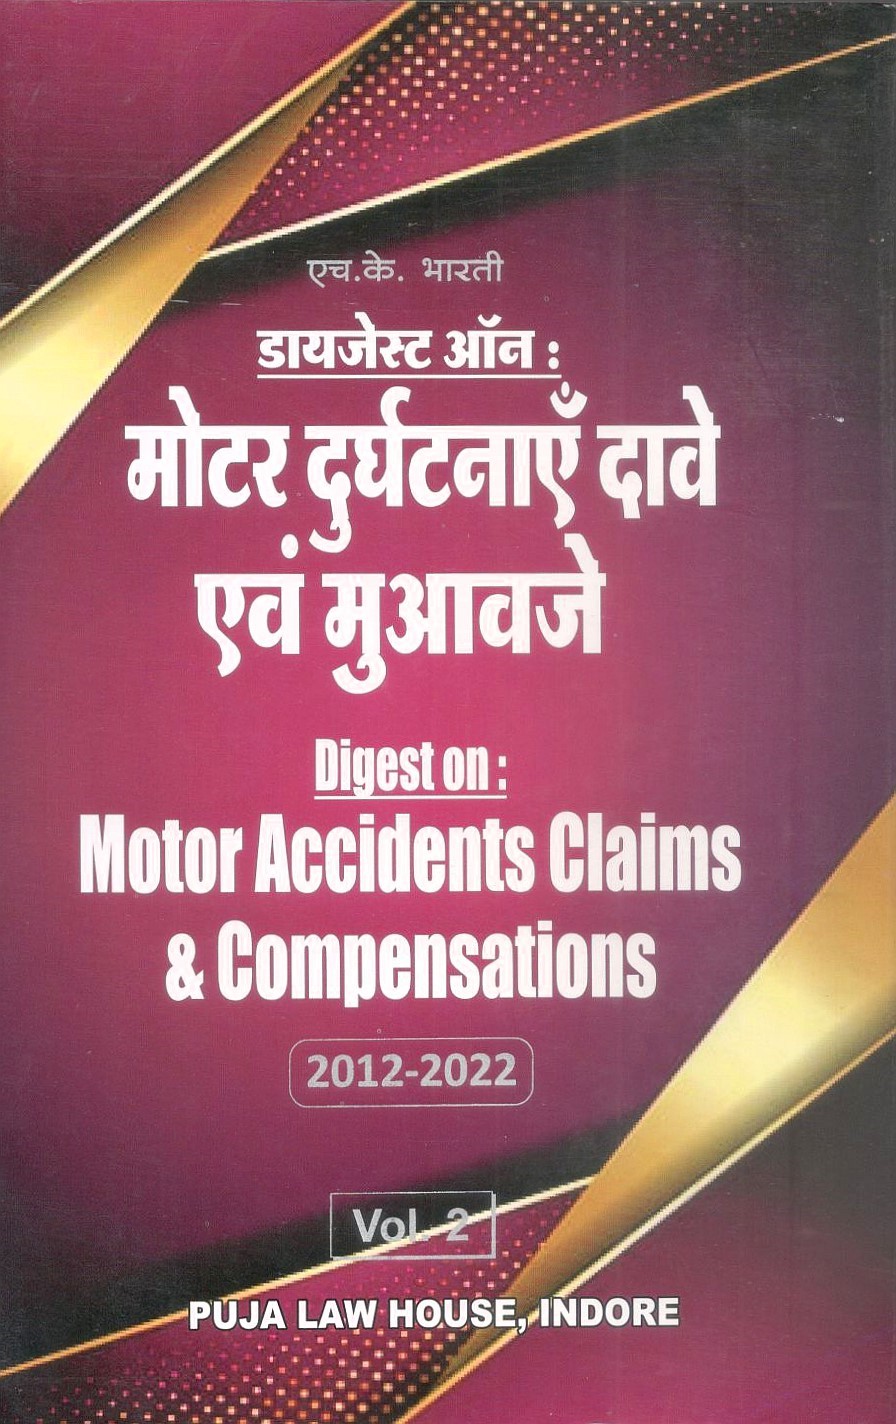 मोटर दुर्घटनाएं दावे एवं मुआवजे डाइजेस्ट (2012-2022) / digest on Motor Accidents claims and Compensations (2012-2022)